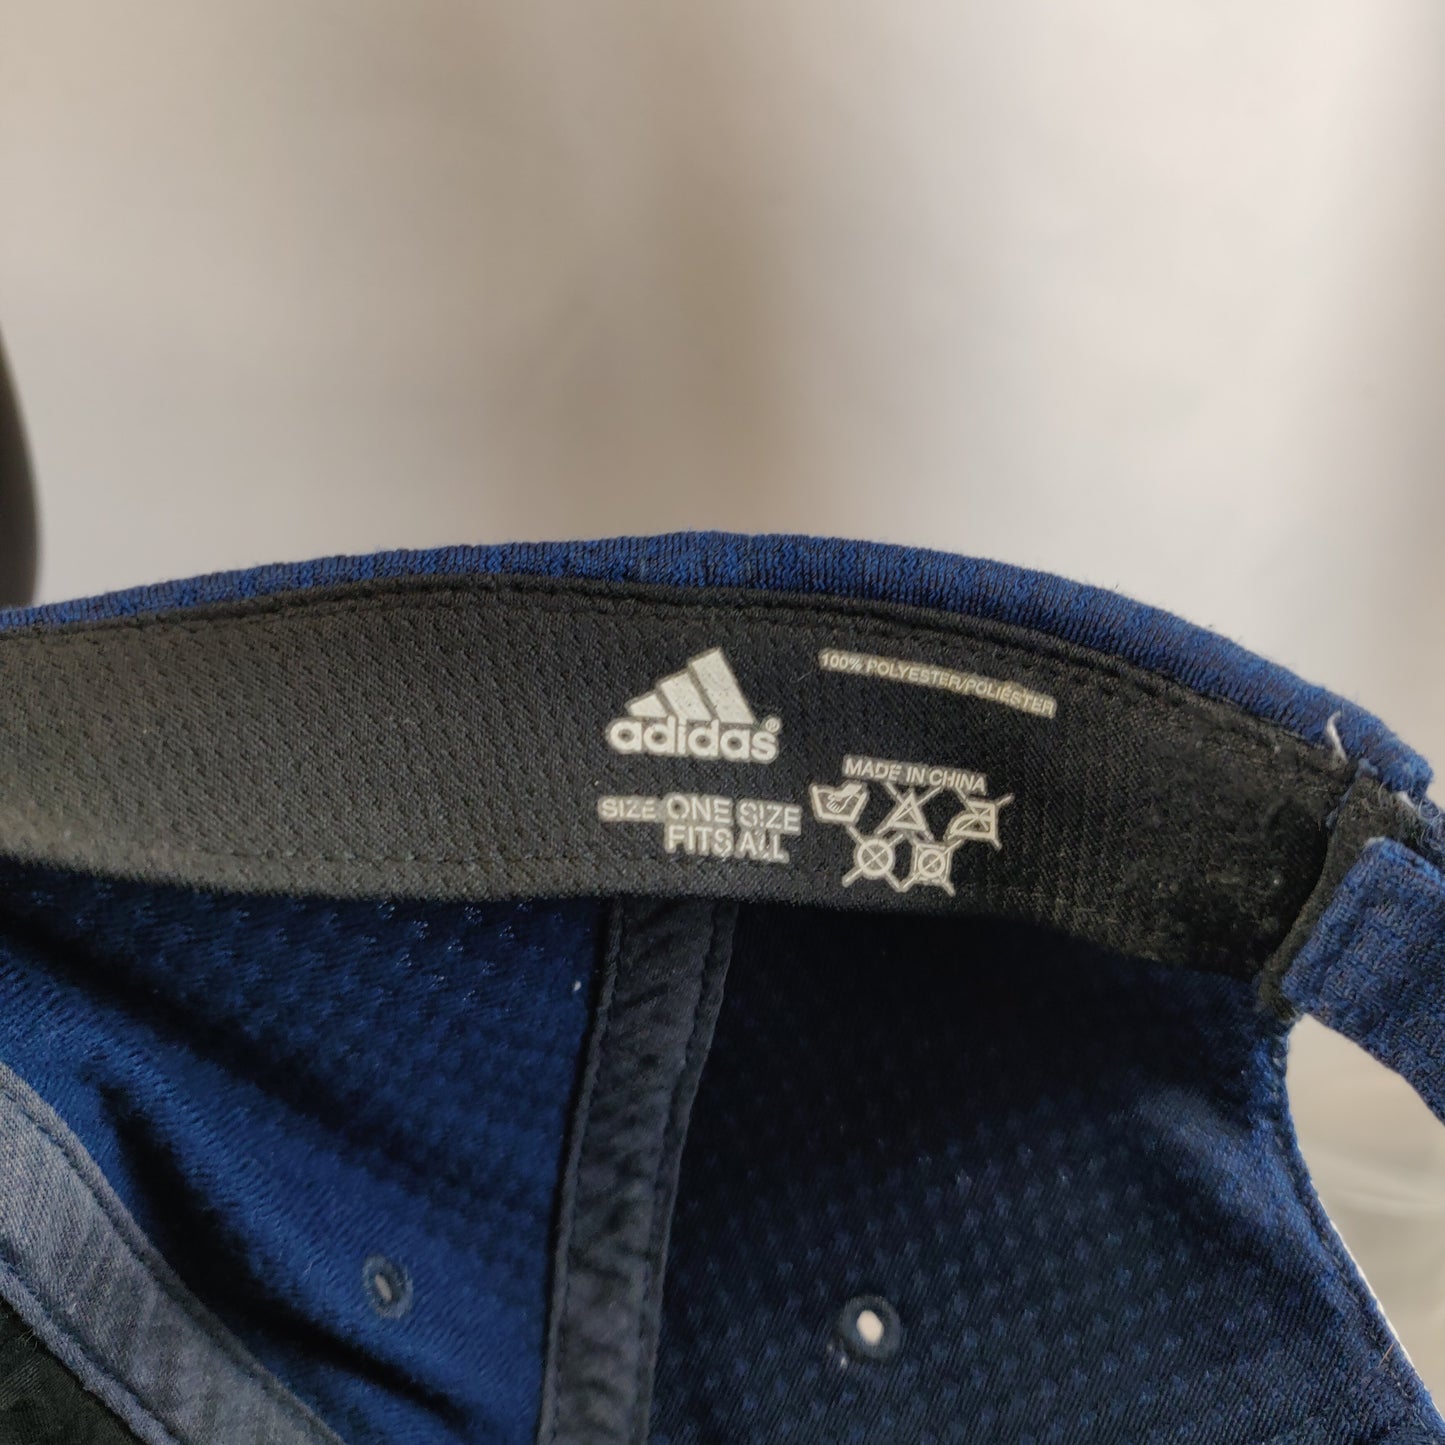 Adidas ClimaCool 3 Stripes Blue Golf Baseball Cap Hat Men Unisex One Size